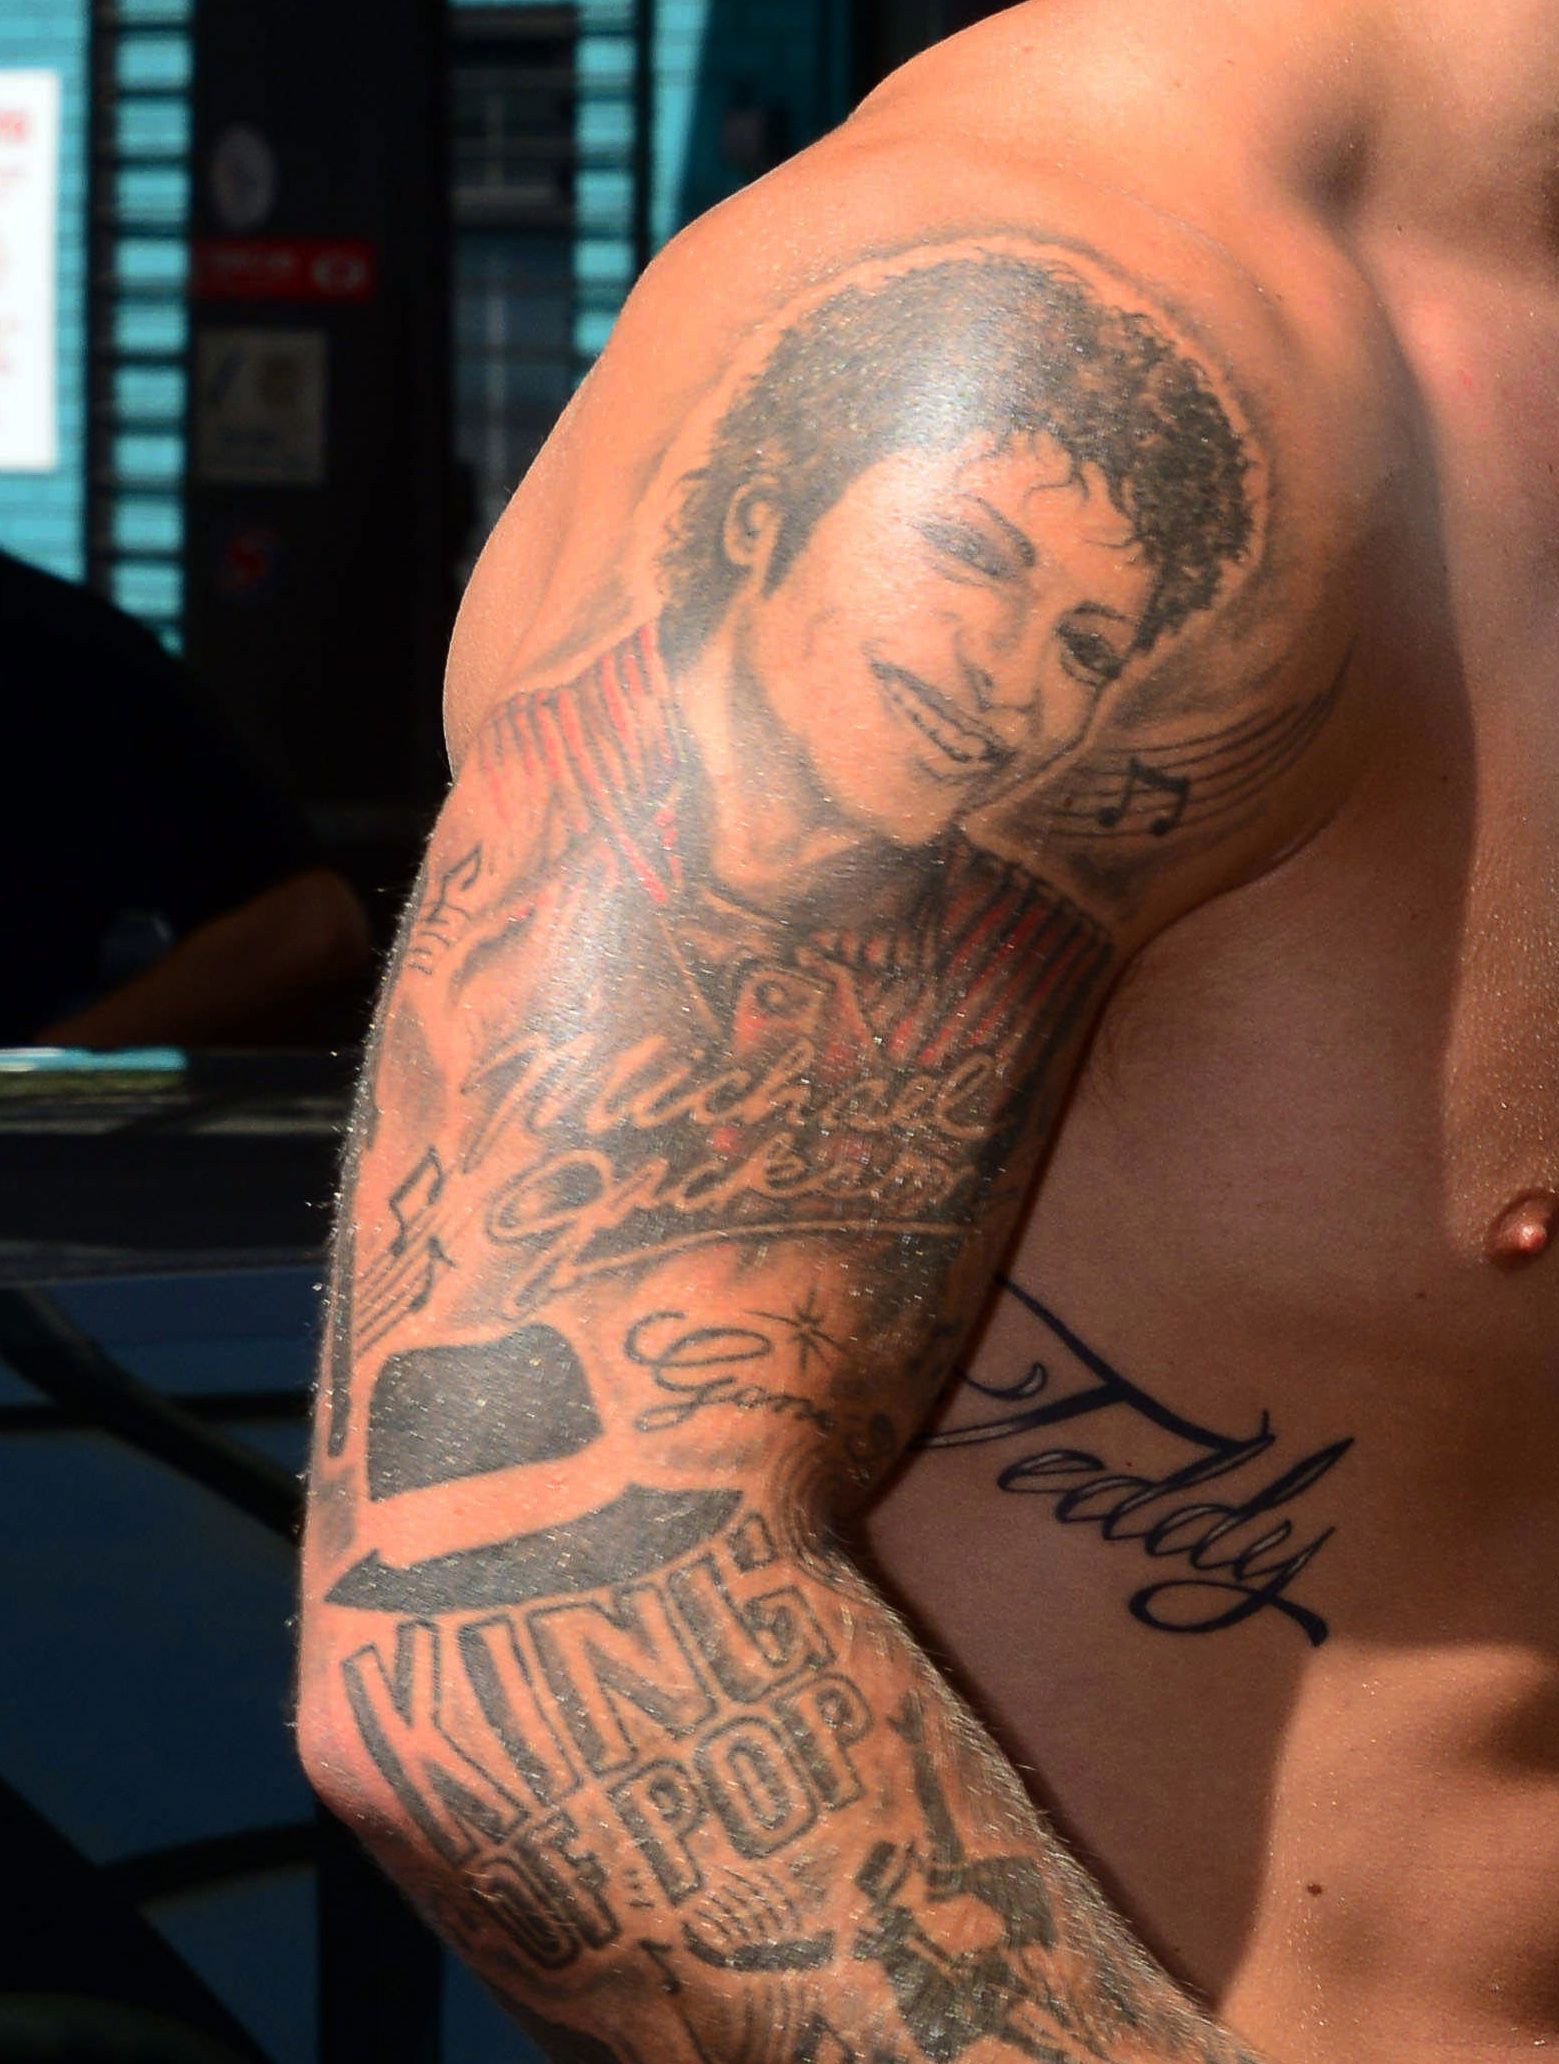 Dan Osborne gets his Michael Jackson tattoo lasered off  Mirror Online